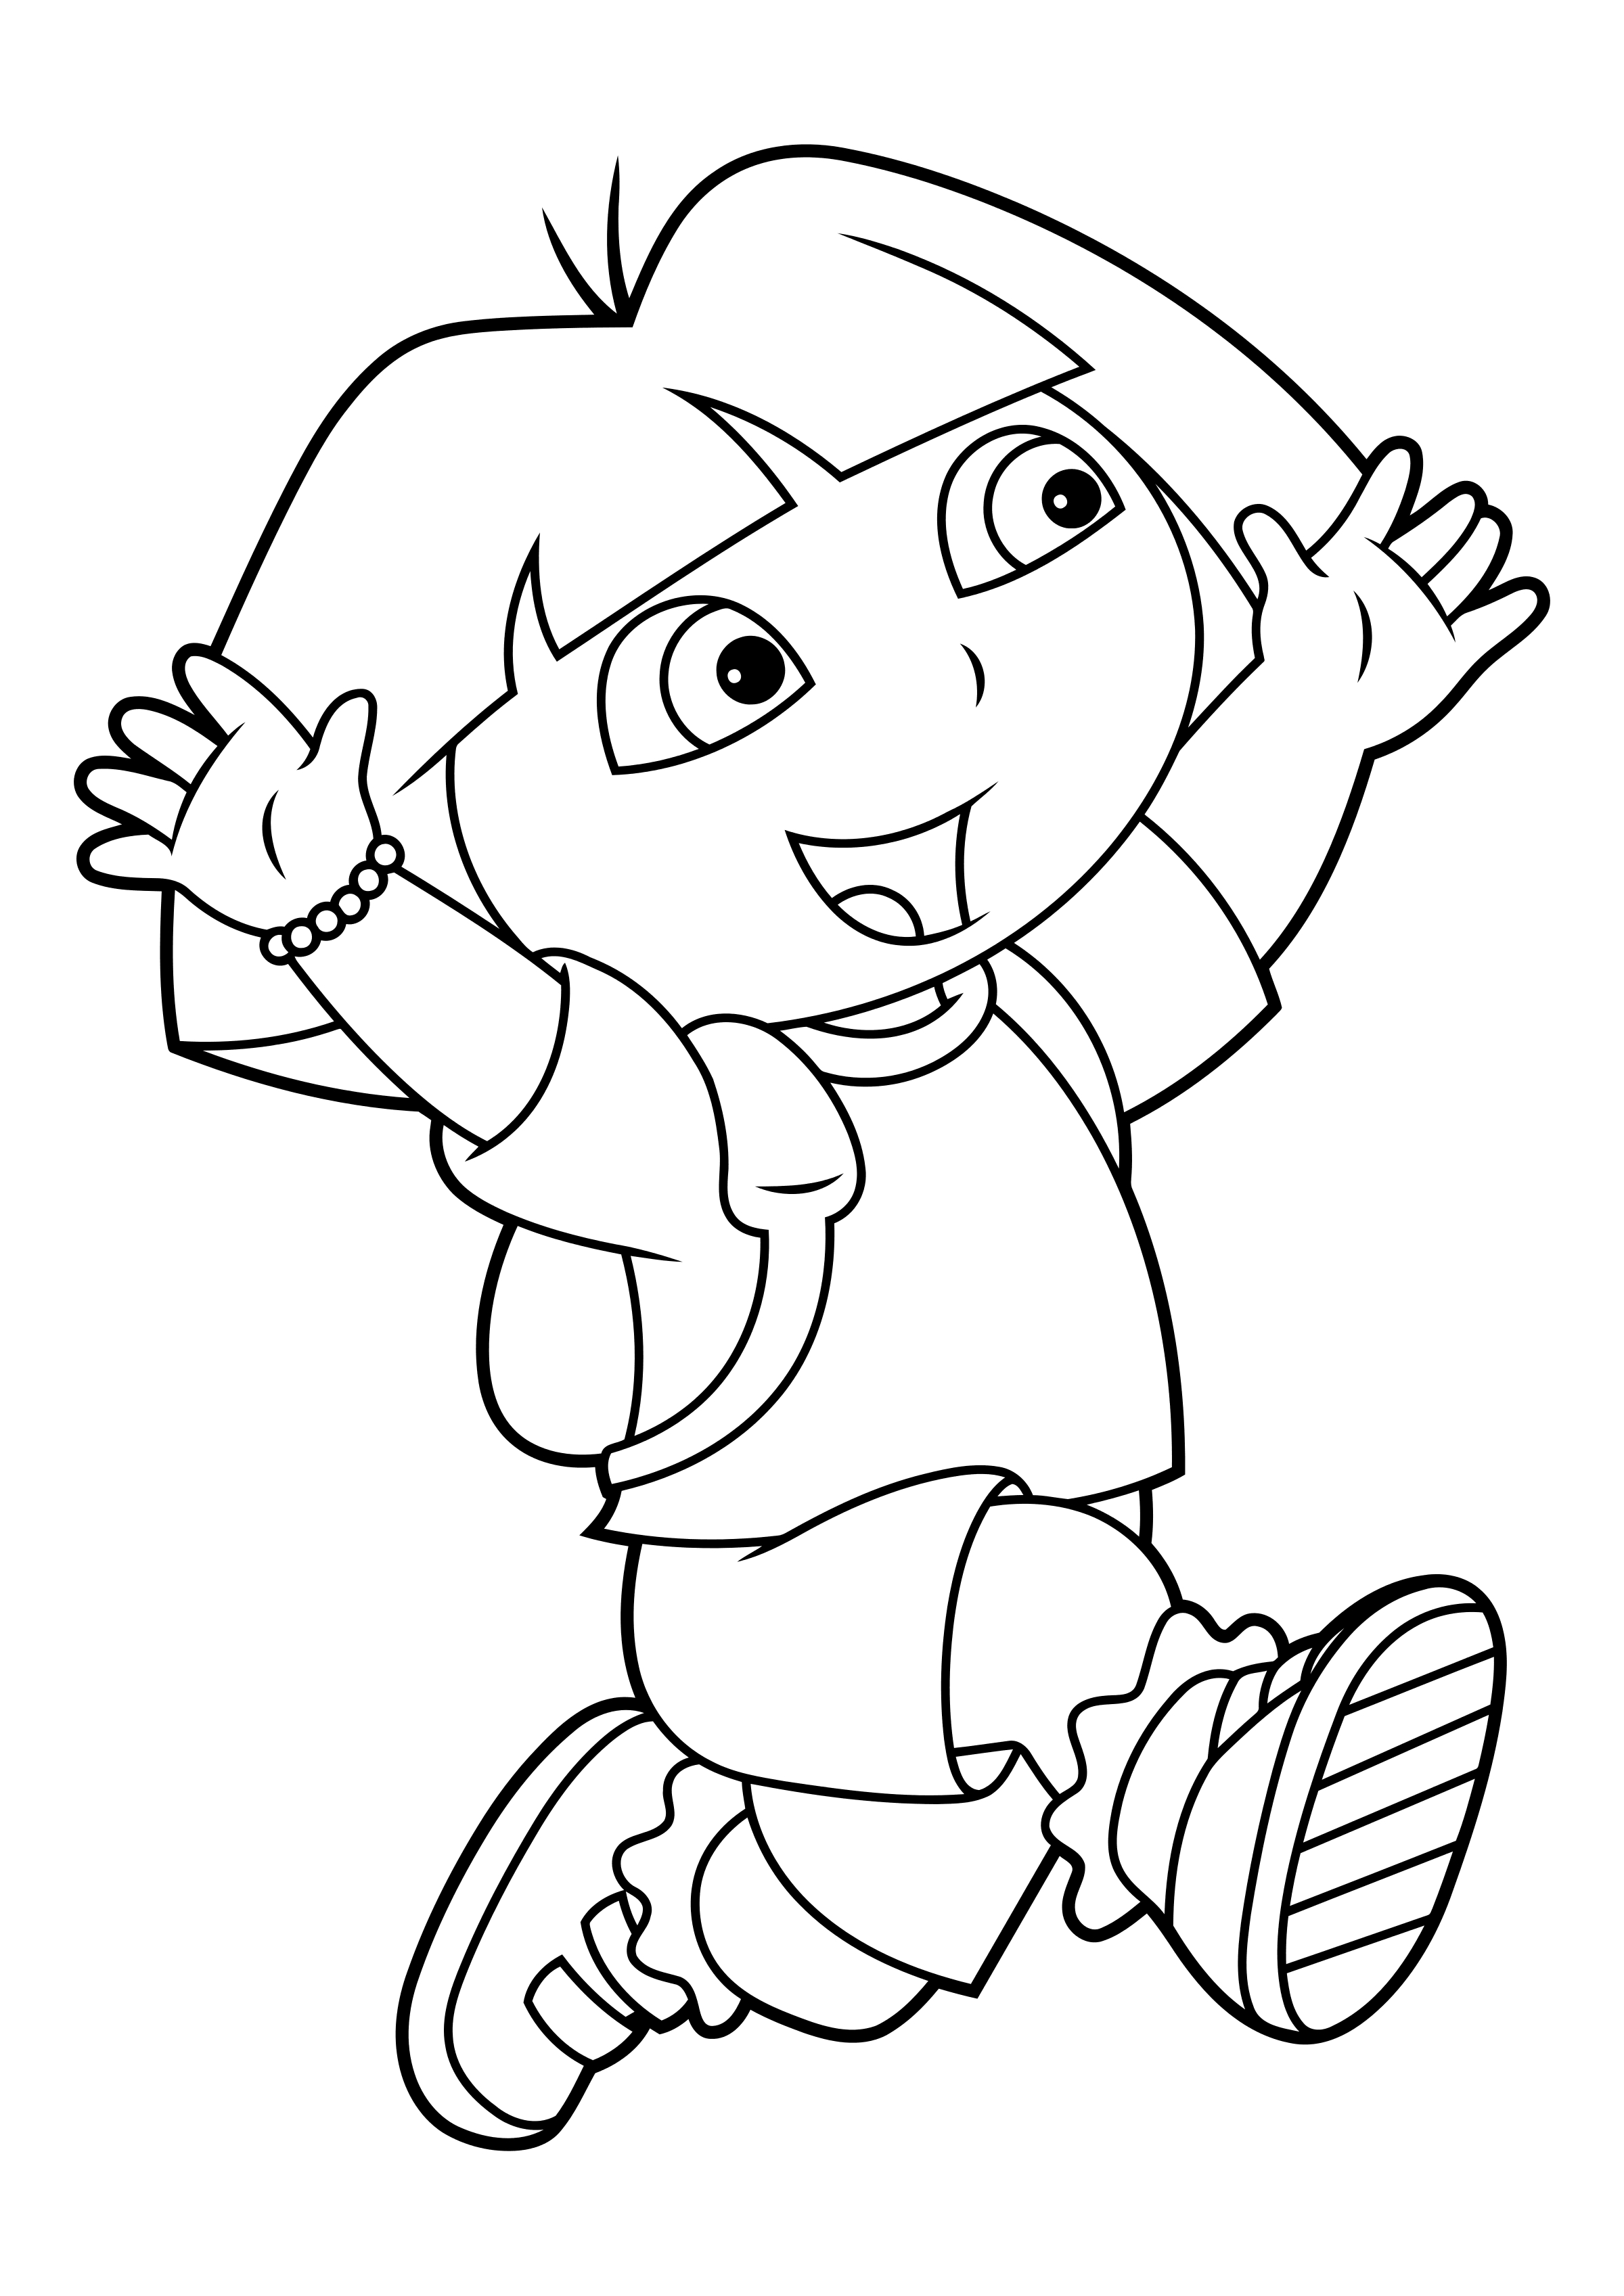 Coloring page Dora the Explorer Dora runs to solve riddles